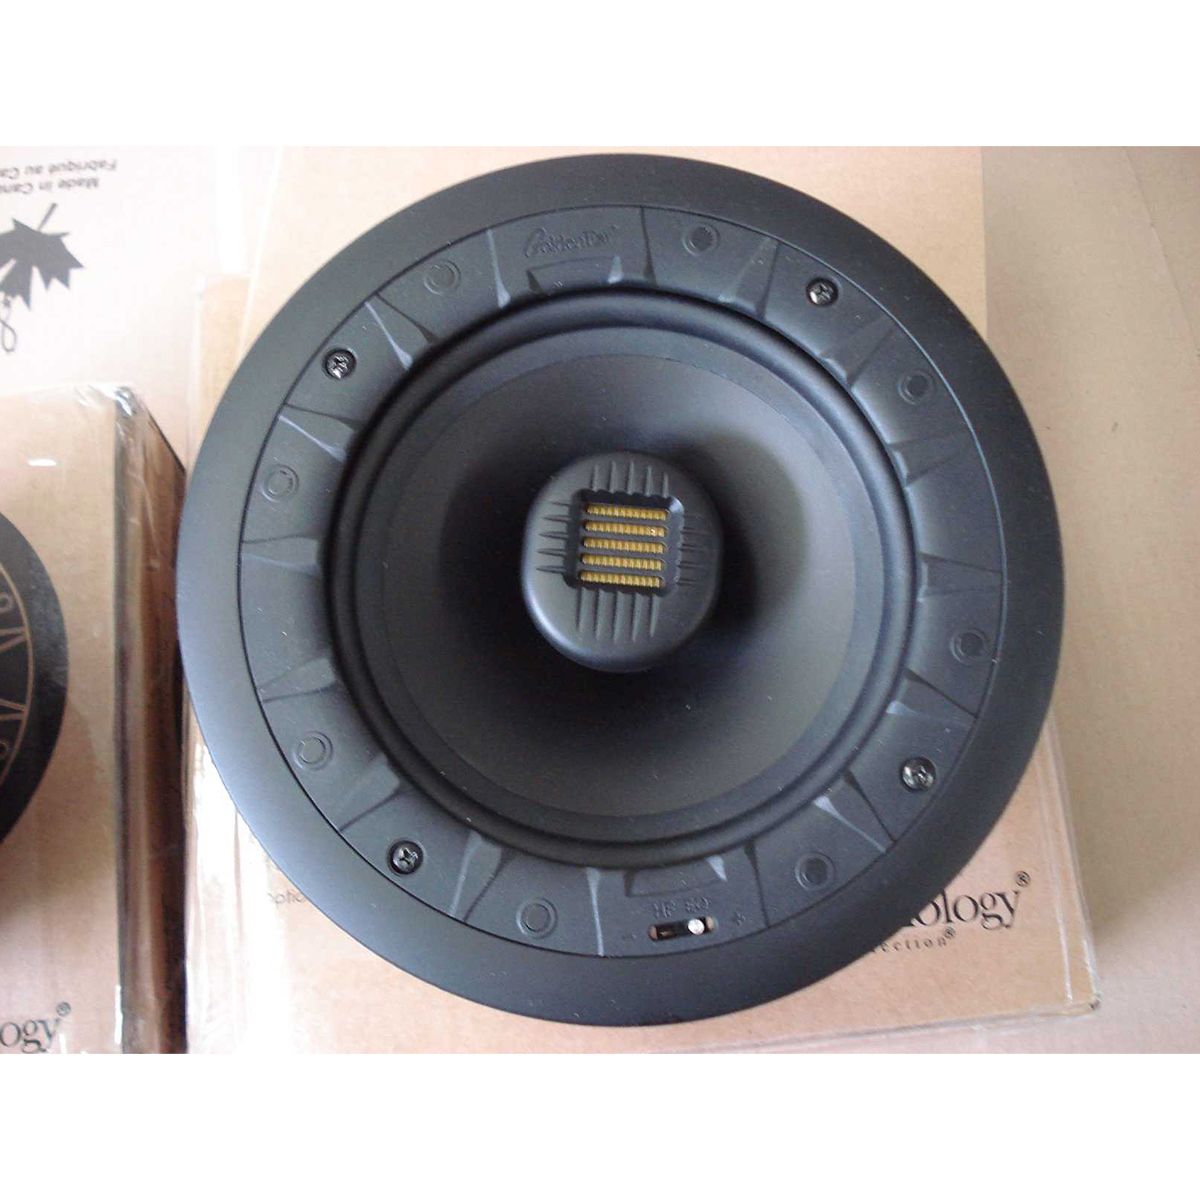 GoldenEar Invisa 650 In-Wall/In-Ceiling Loudspeaker